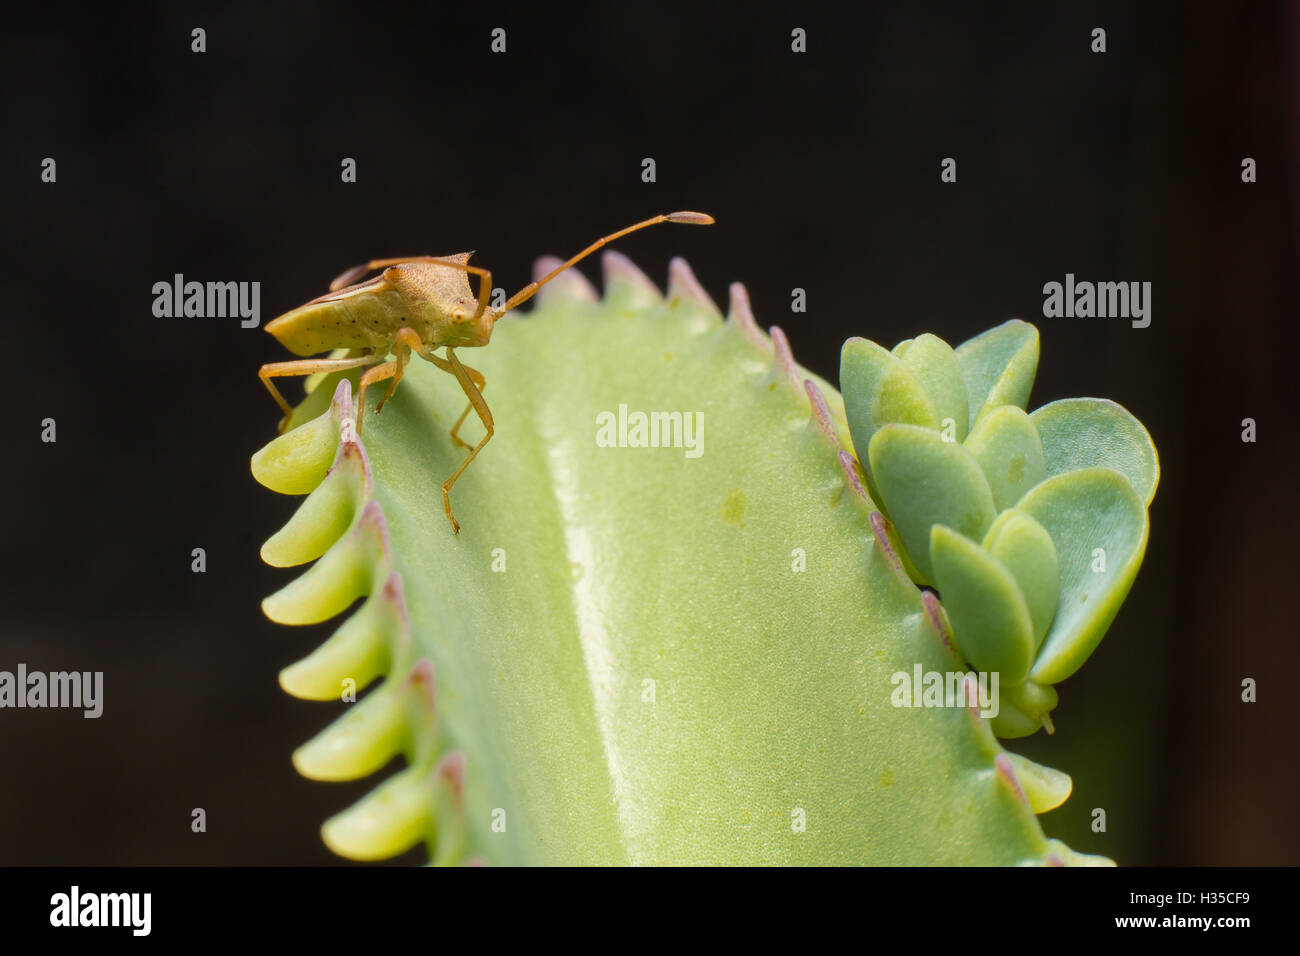 Nature image showing details of insect life: closeup / macro of a hemiptera Nezara Viridula Heteroptera pentatomidae palomera pr Stock Photo